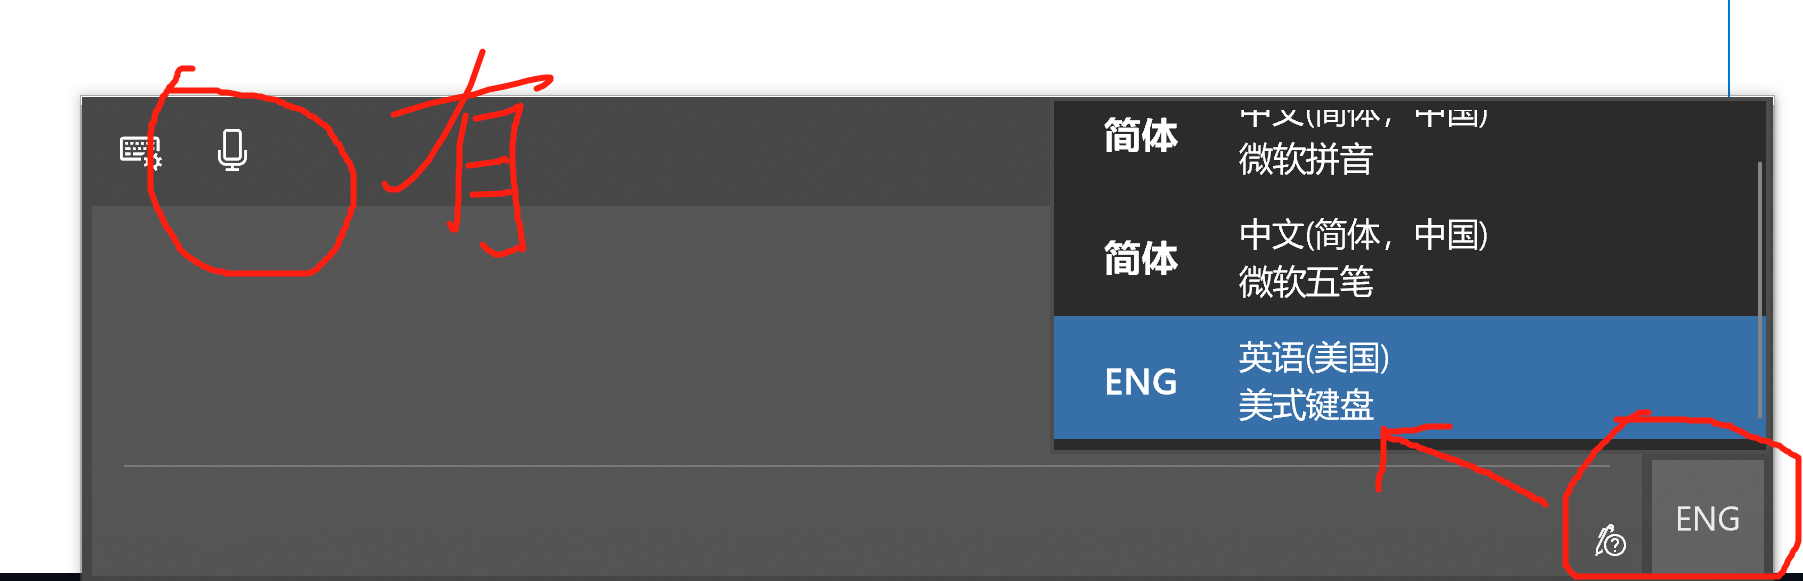 Windows 10 输入法美式键盘英文输入法有语音识别转文字输入 但切换到中文输入法没有语音识别 Microsoft Community